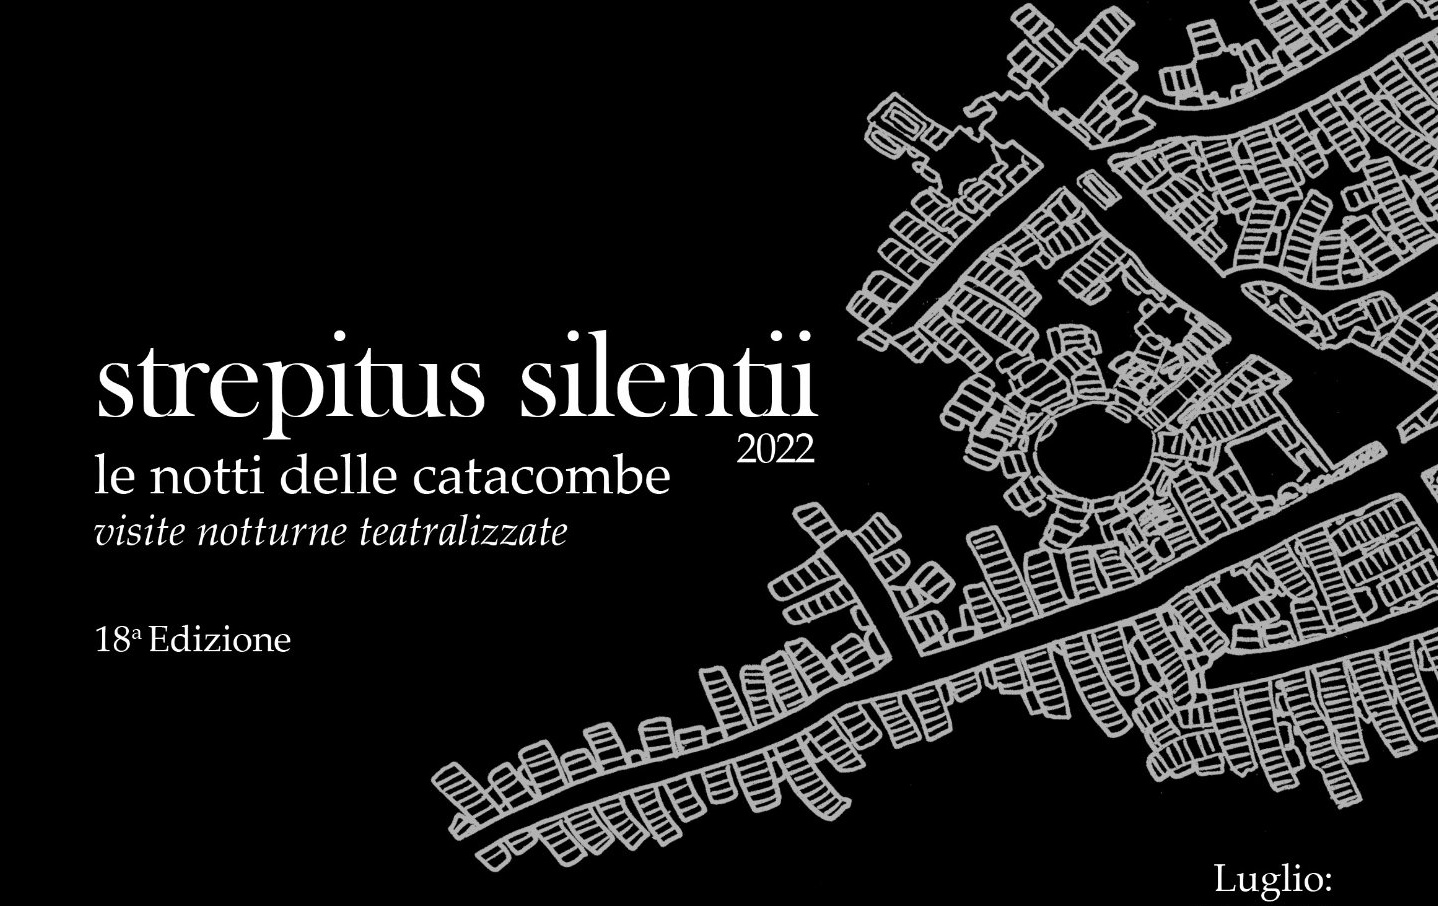 Strepitus silentii 2022, le notti delle catacombe